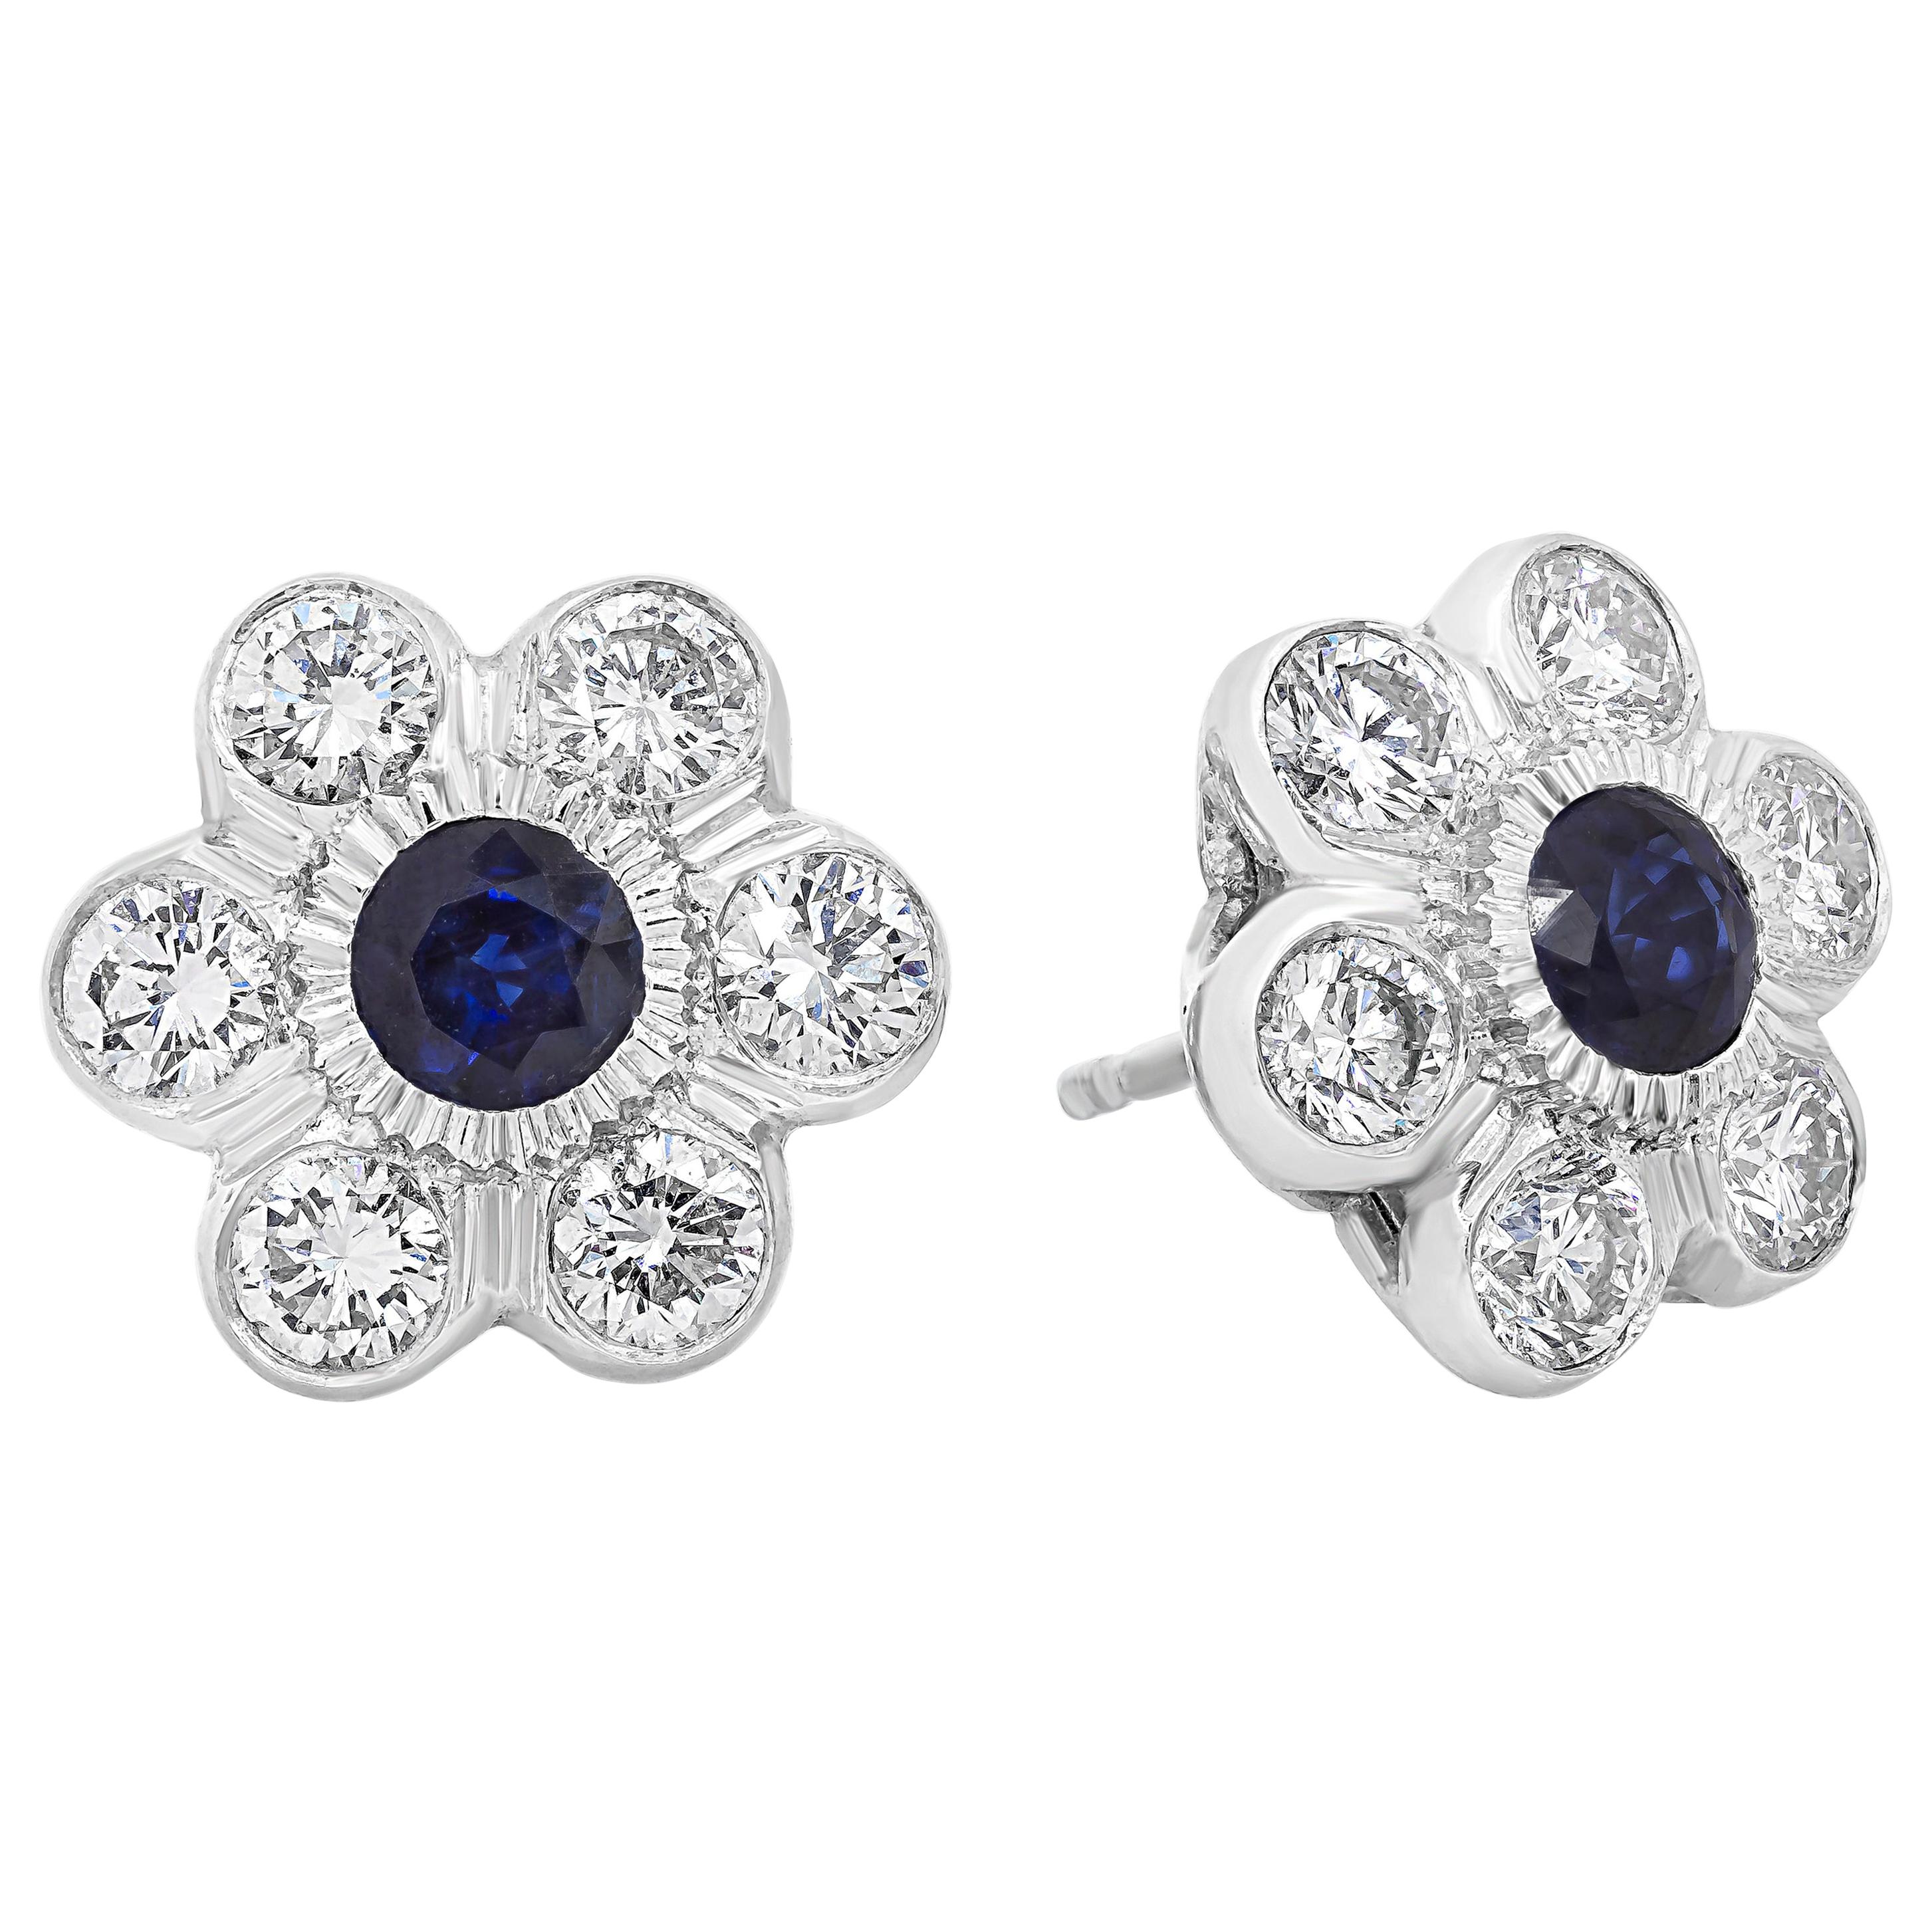 Roman Malakov 1.33 Carats Total Round Blue Sapphire and Diamond Stud Earrings